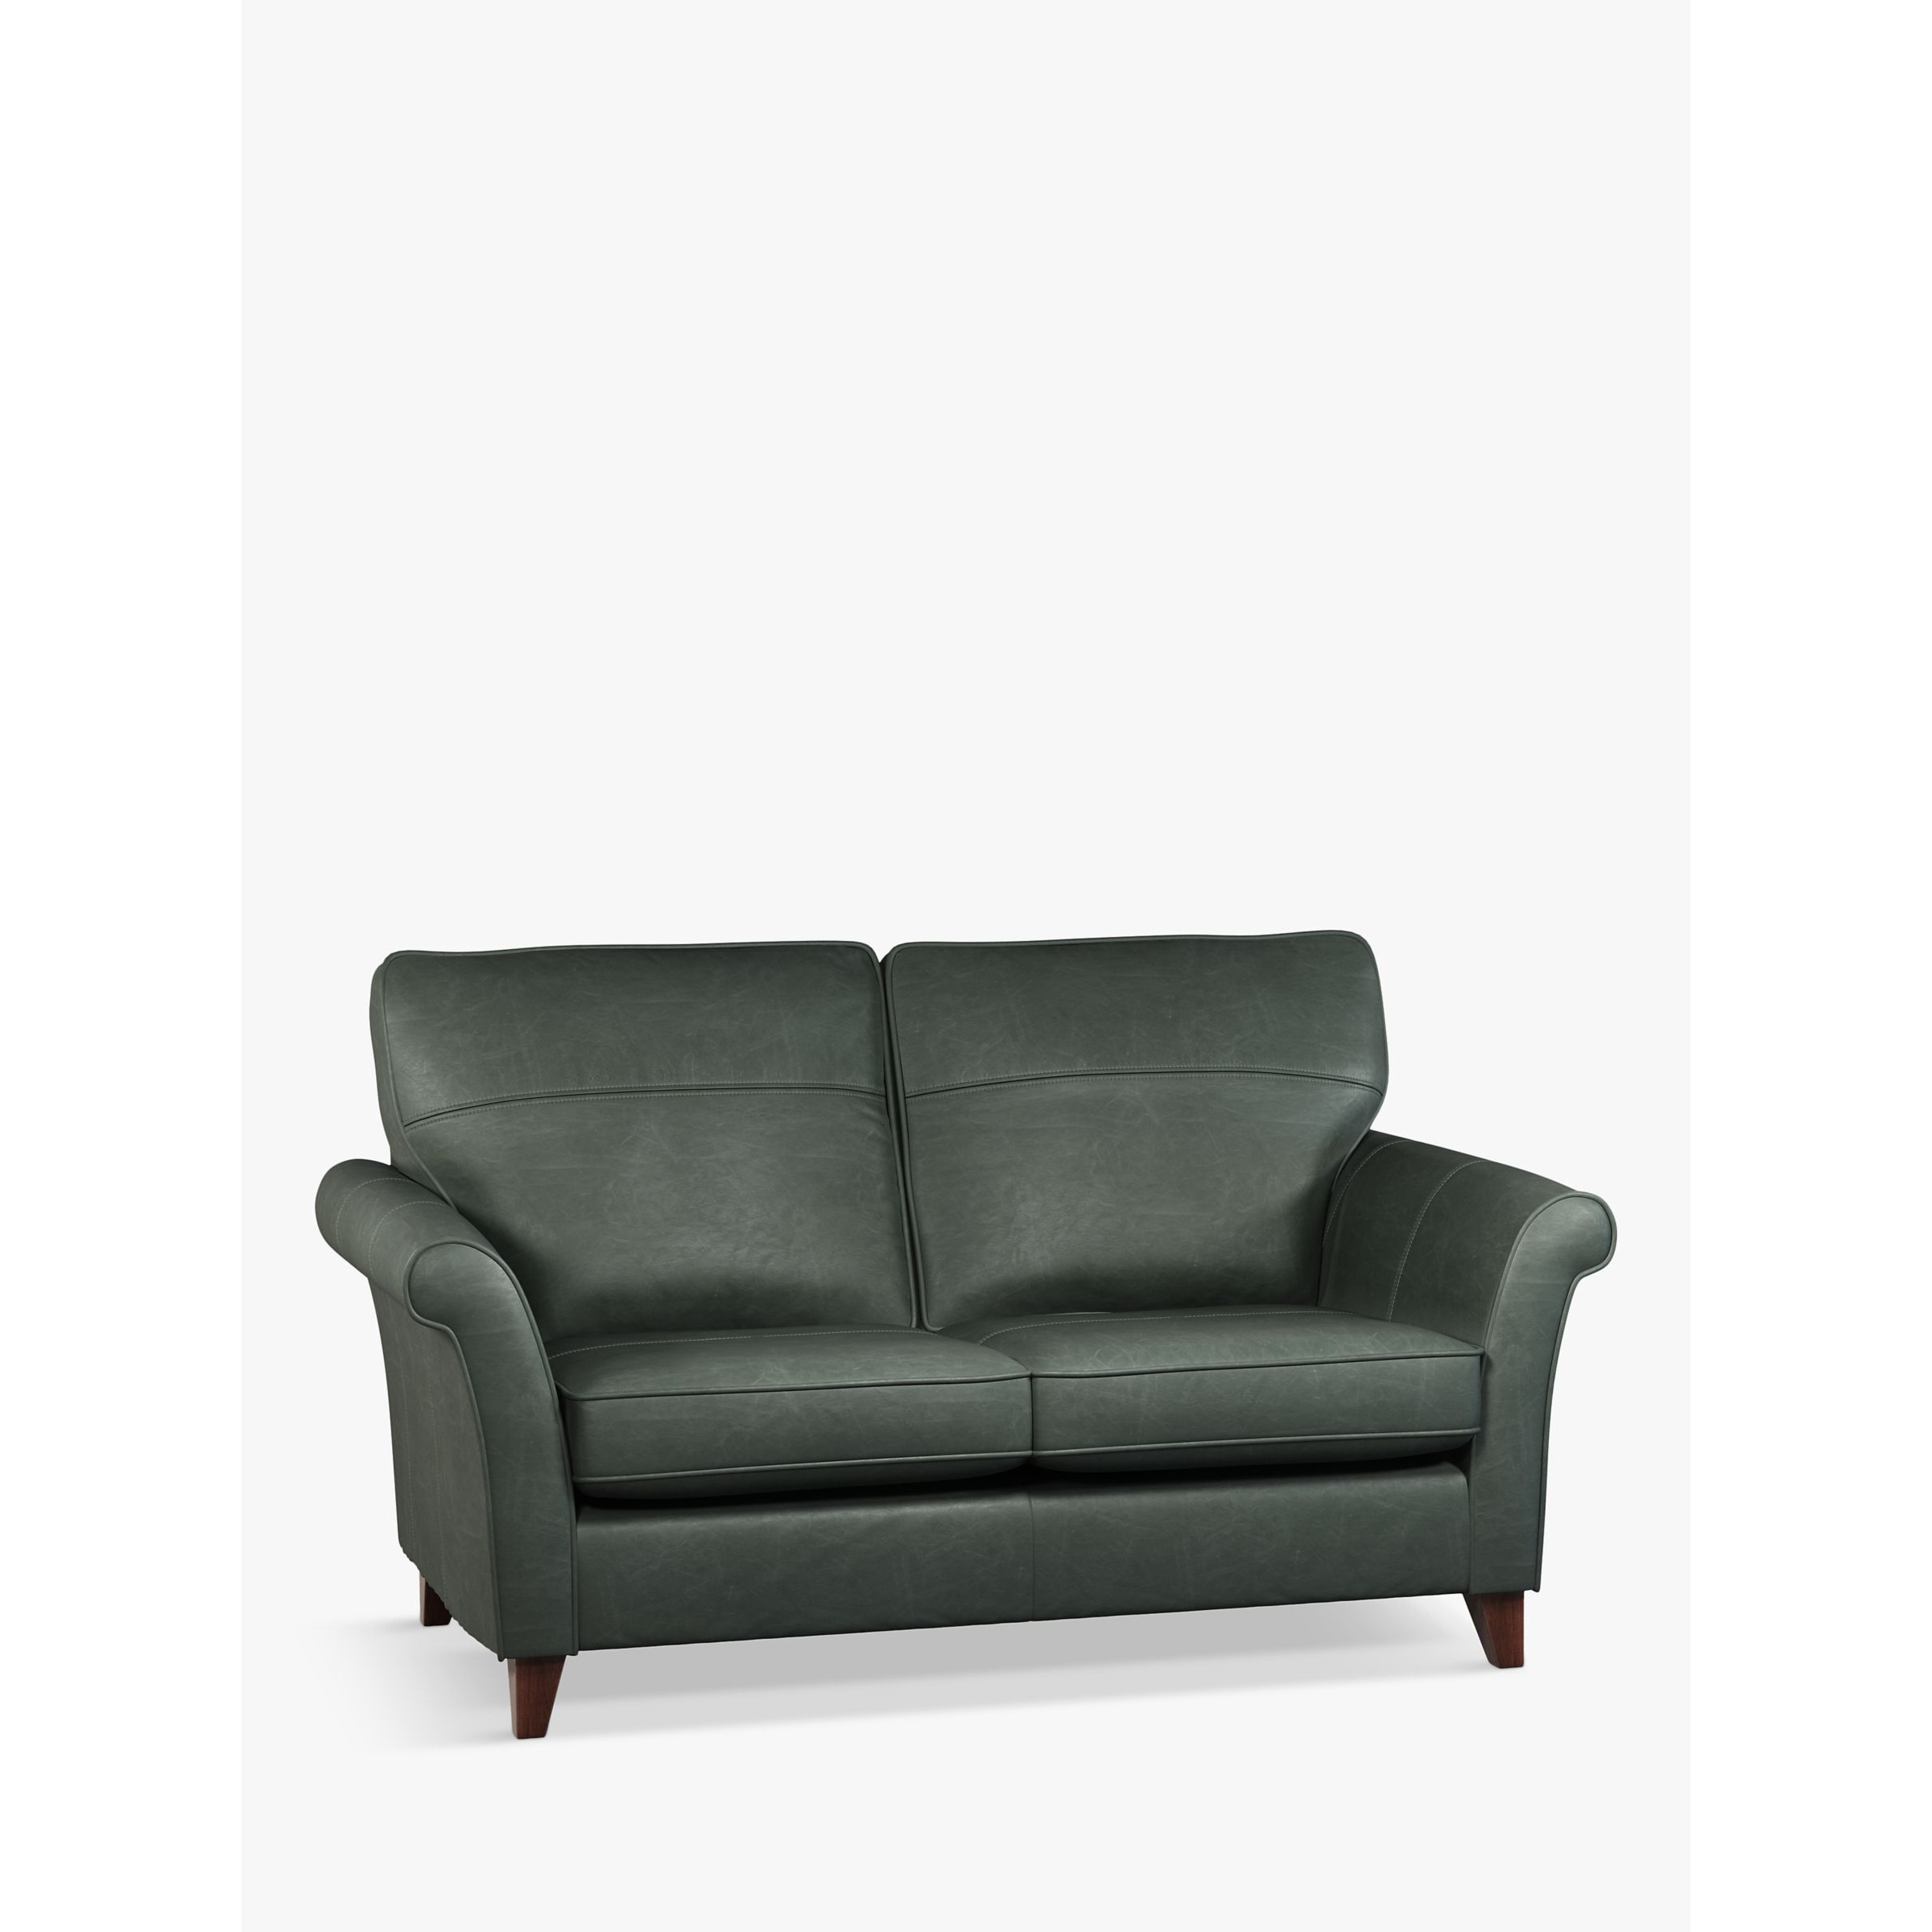 John Lewis Charlotte High Back Medium 2 Seater Leather Sofa, Dark Leg - image 1